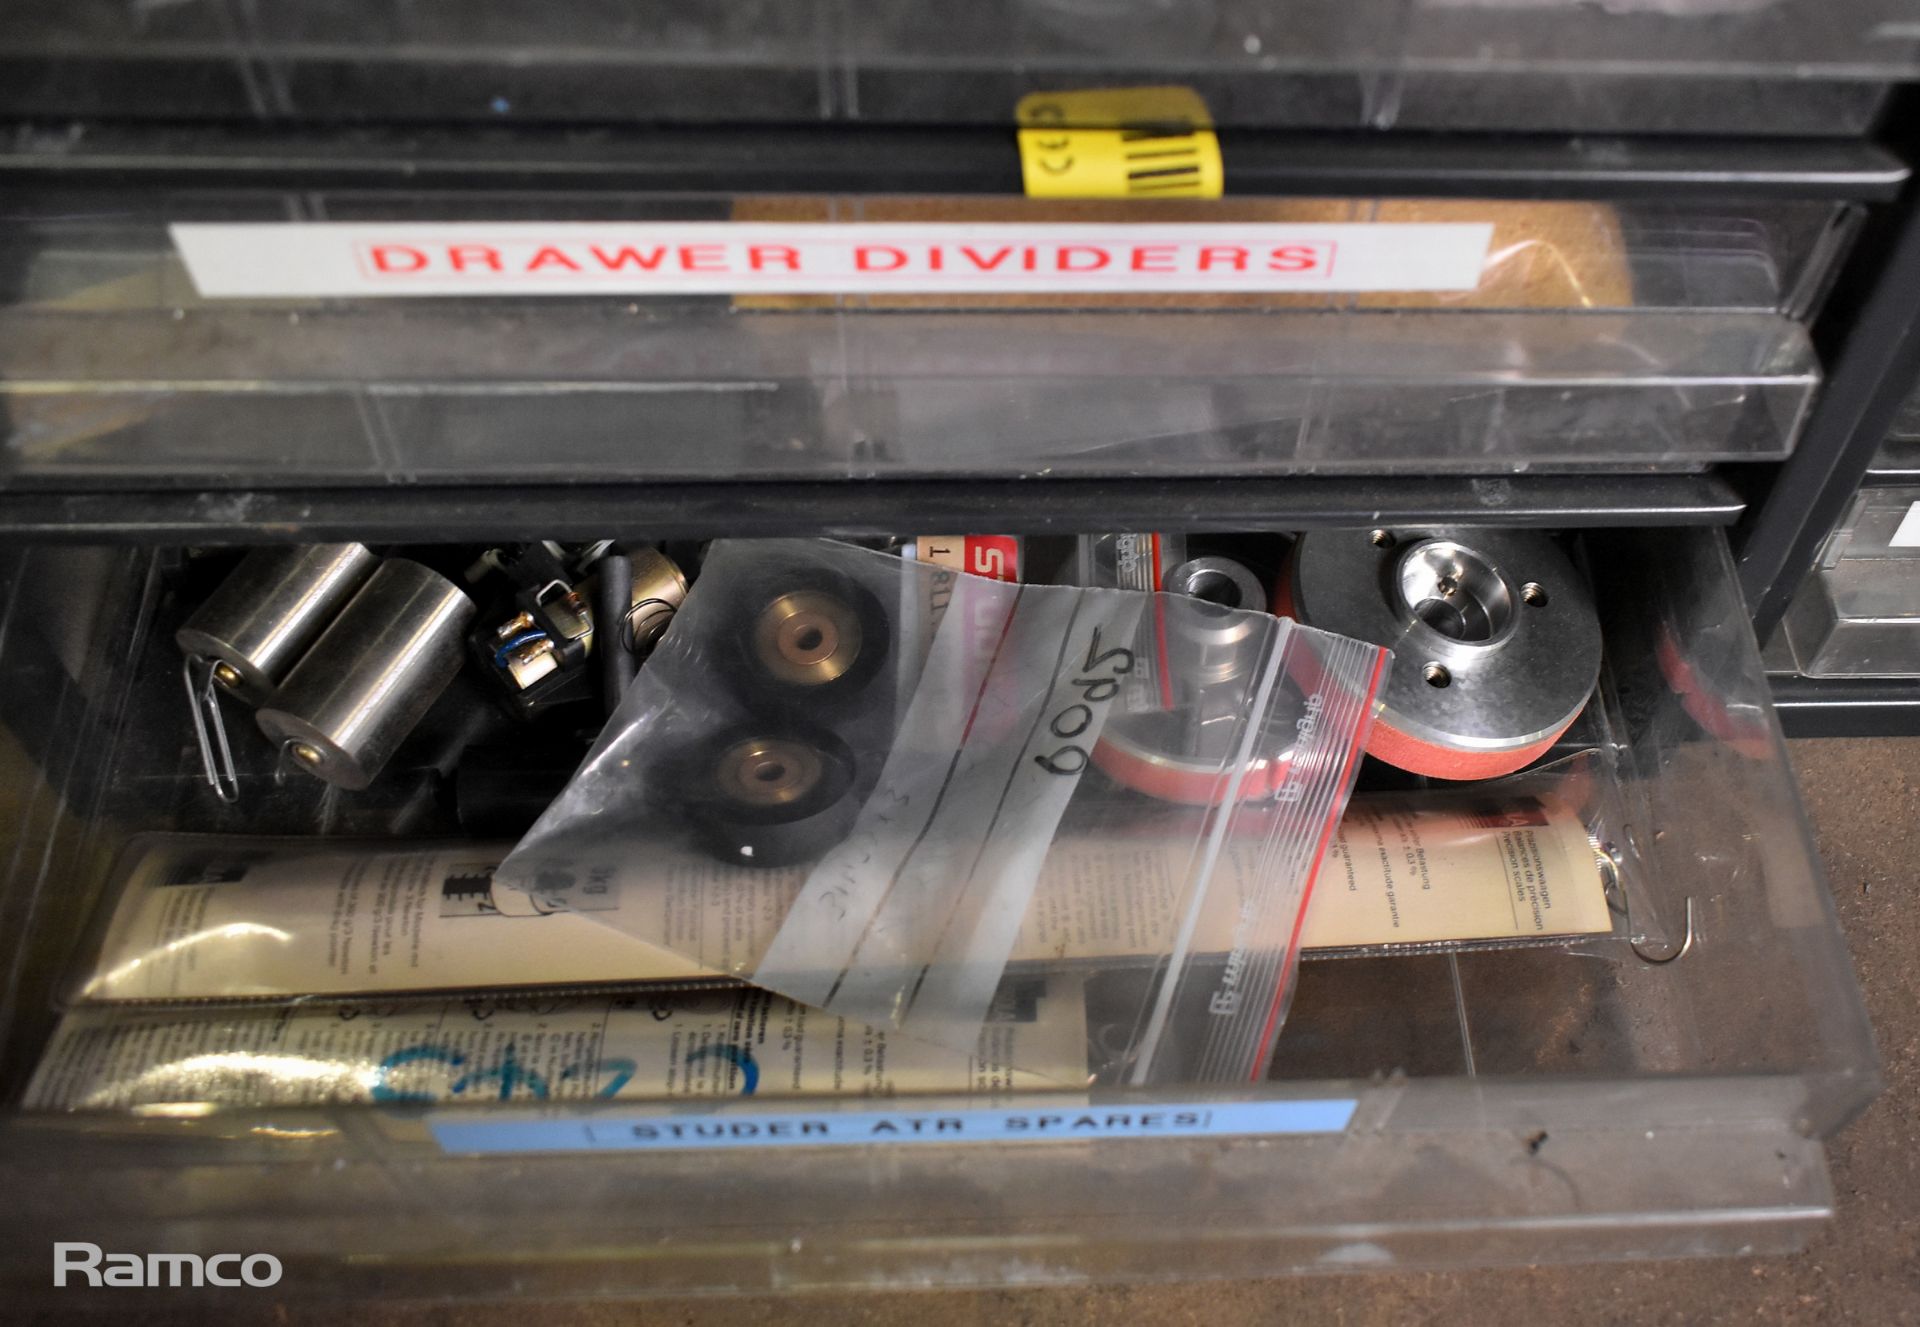 3x Raaco 6 drawer storage chest organisers - W 305 x D 160 x H 420mm, 3x Raaco 36 drawer units - Image 17 of 21